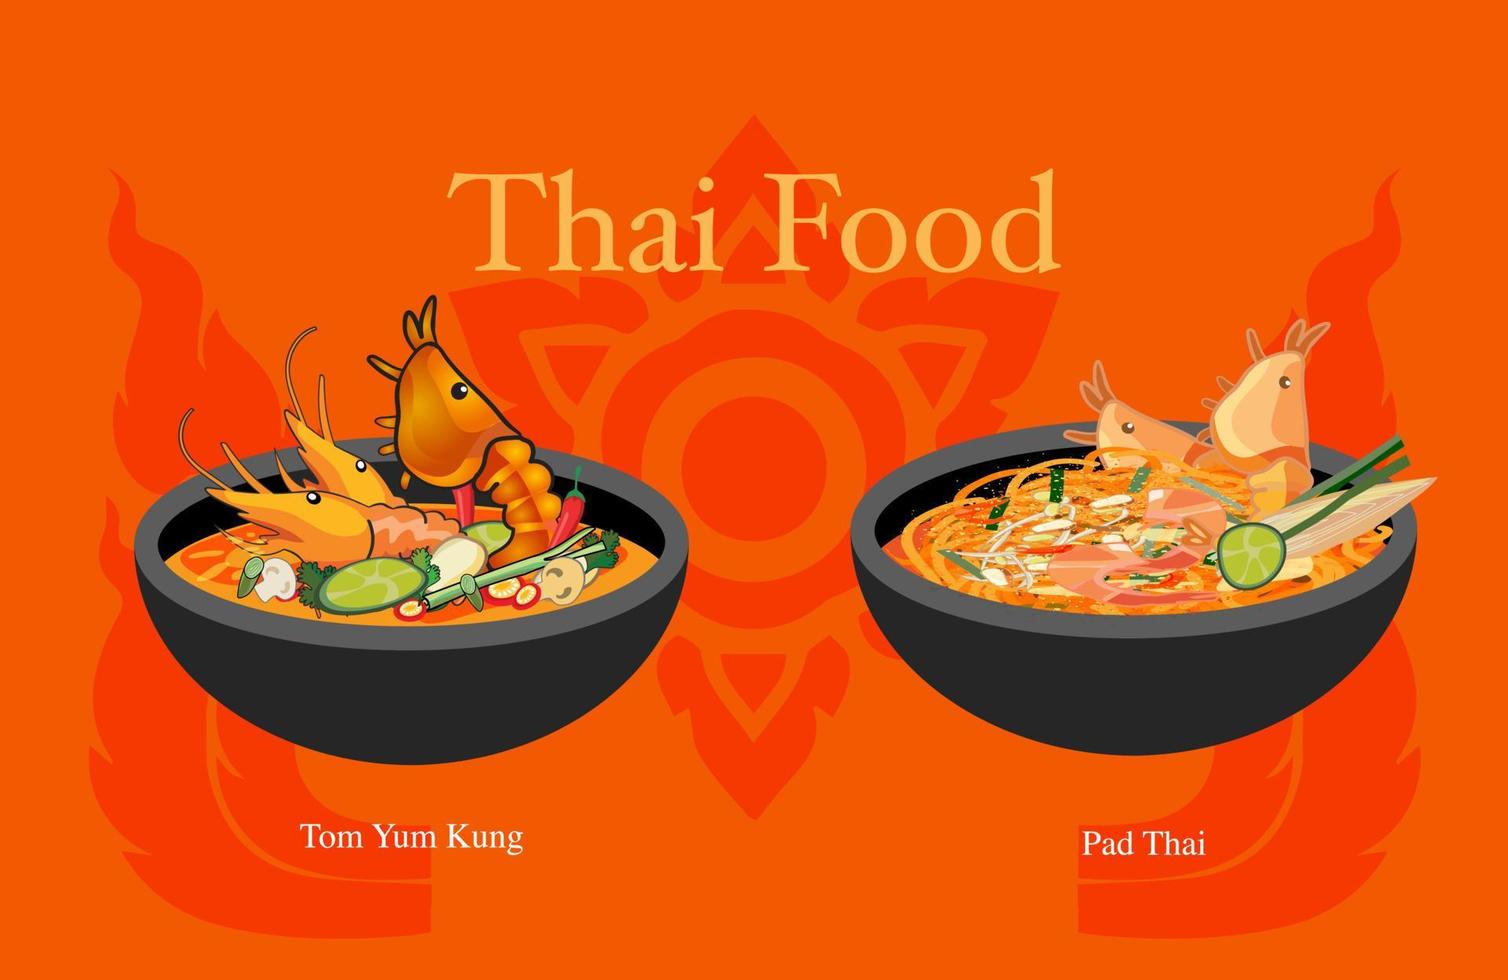 stootkussen Thais en Tom jammie kung menu Thais voedsel vector